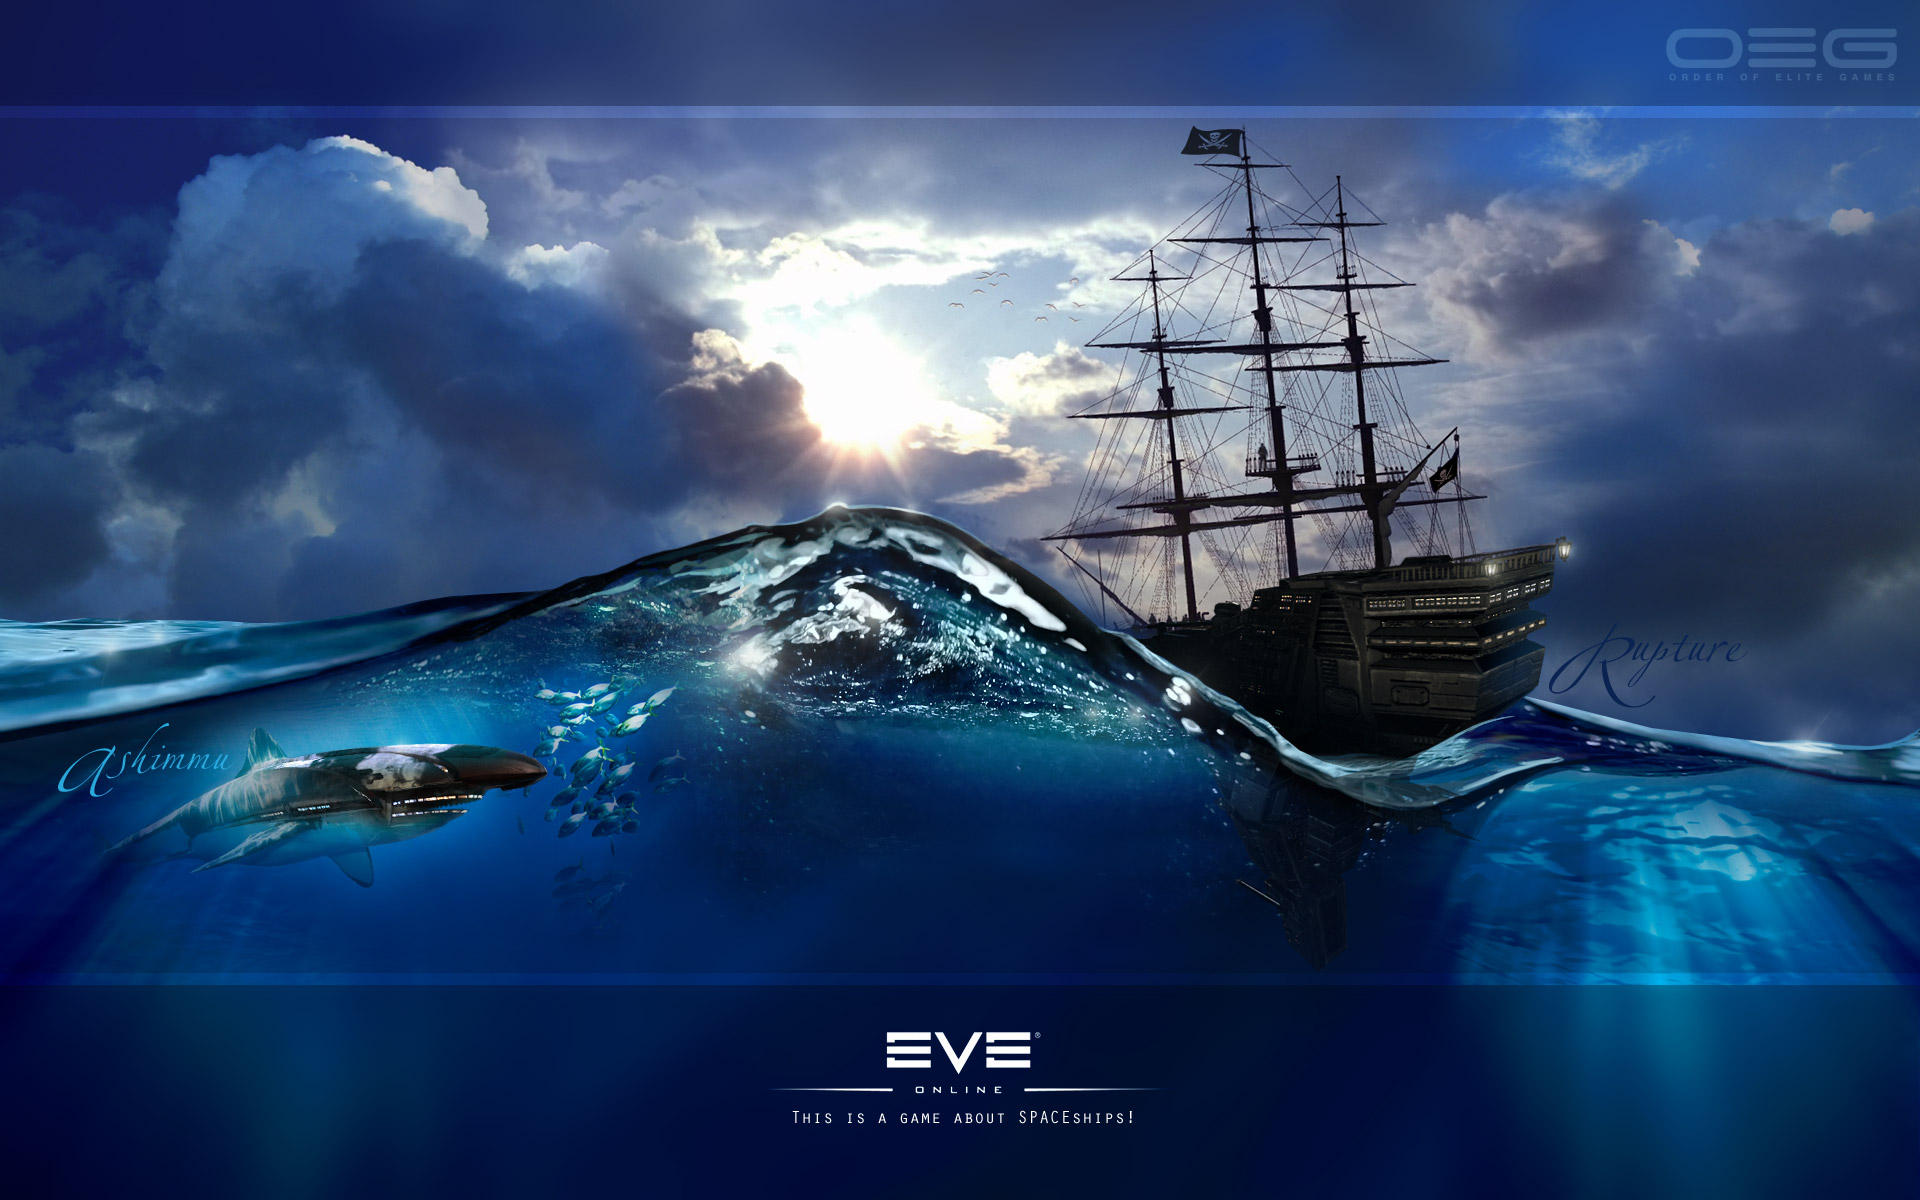 Eve Online Wallpaper Background